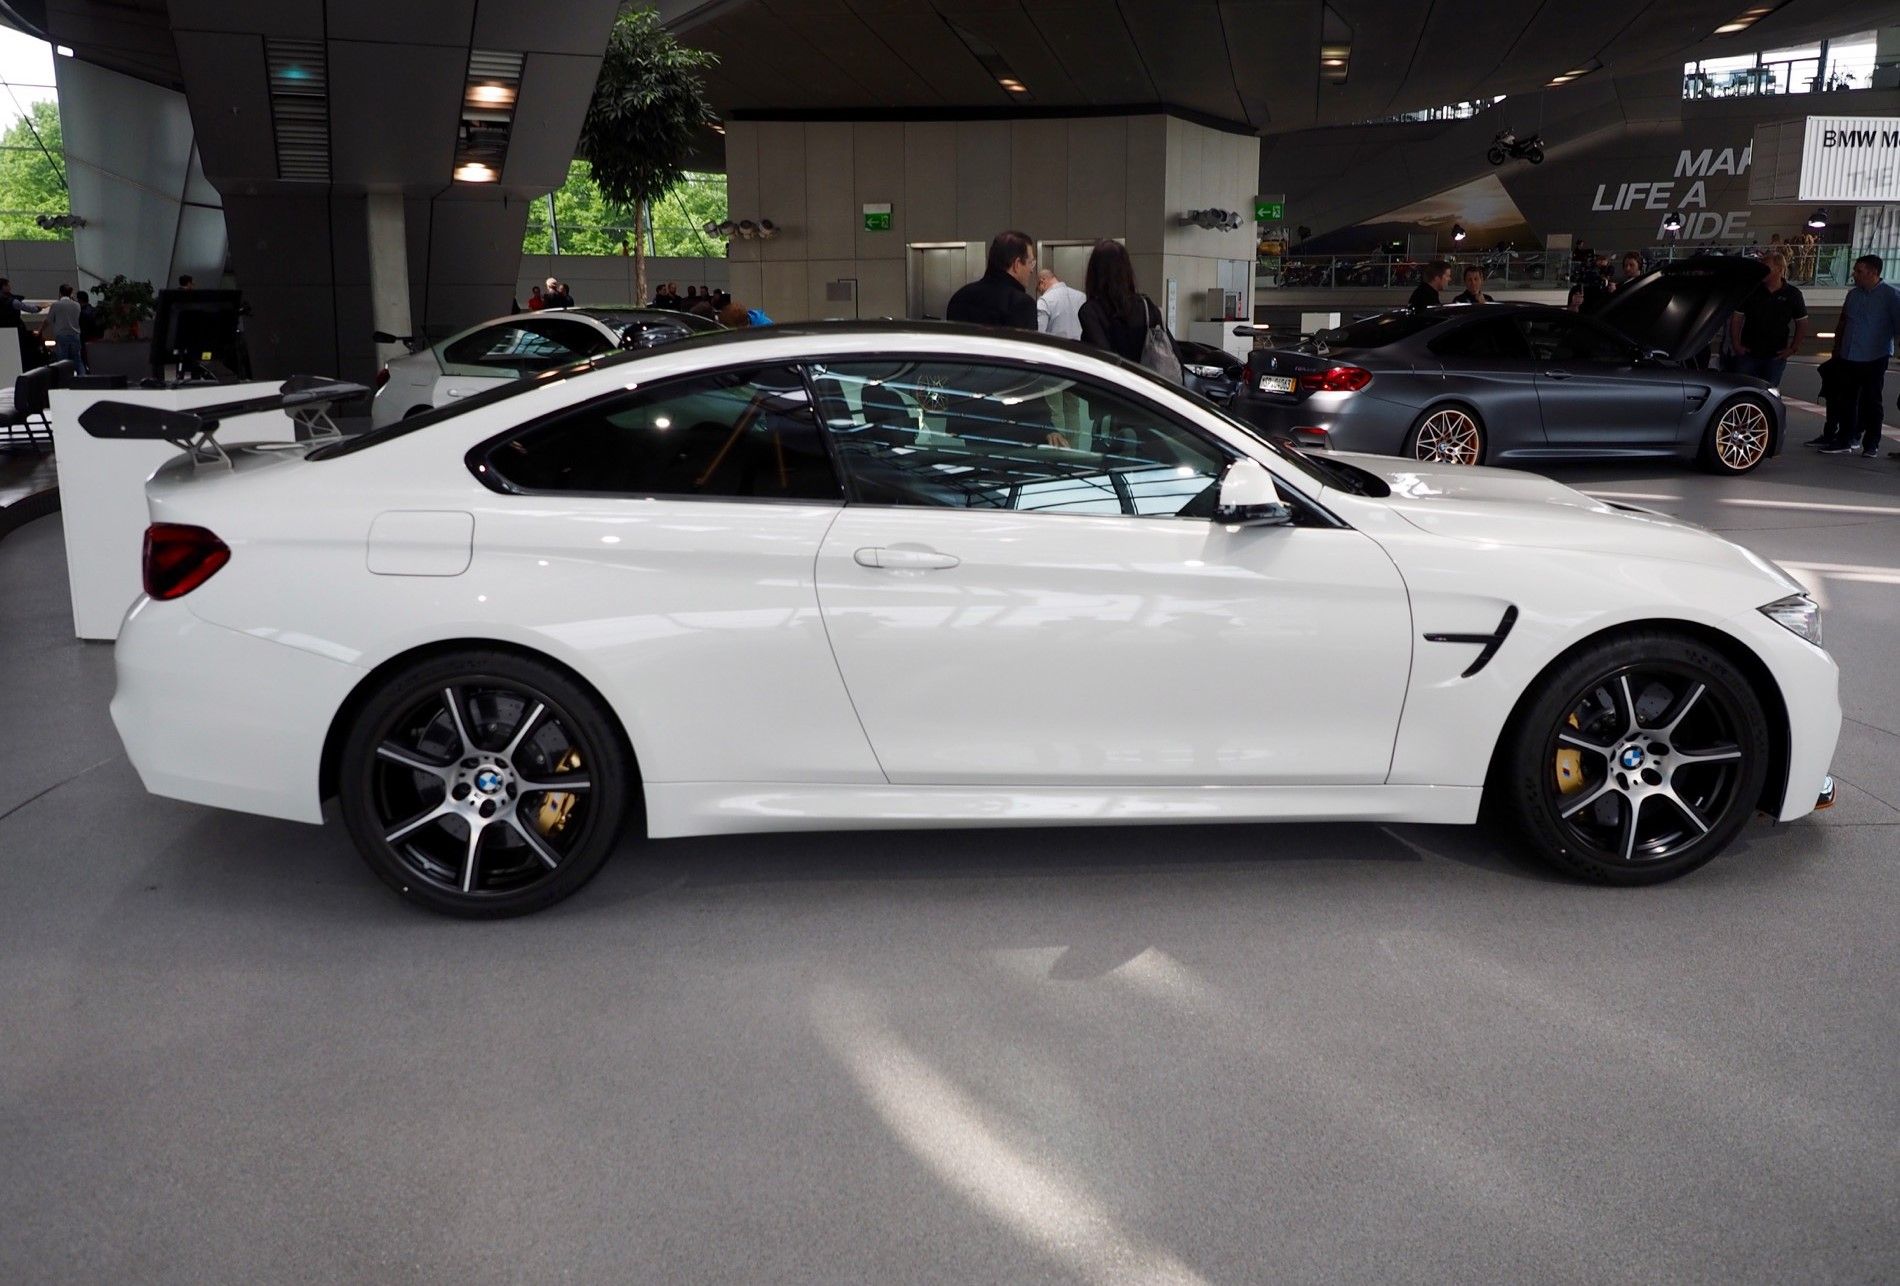 a white BMW M4 GTS with carbon fiber wheels